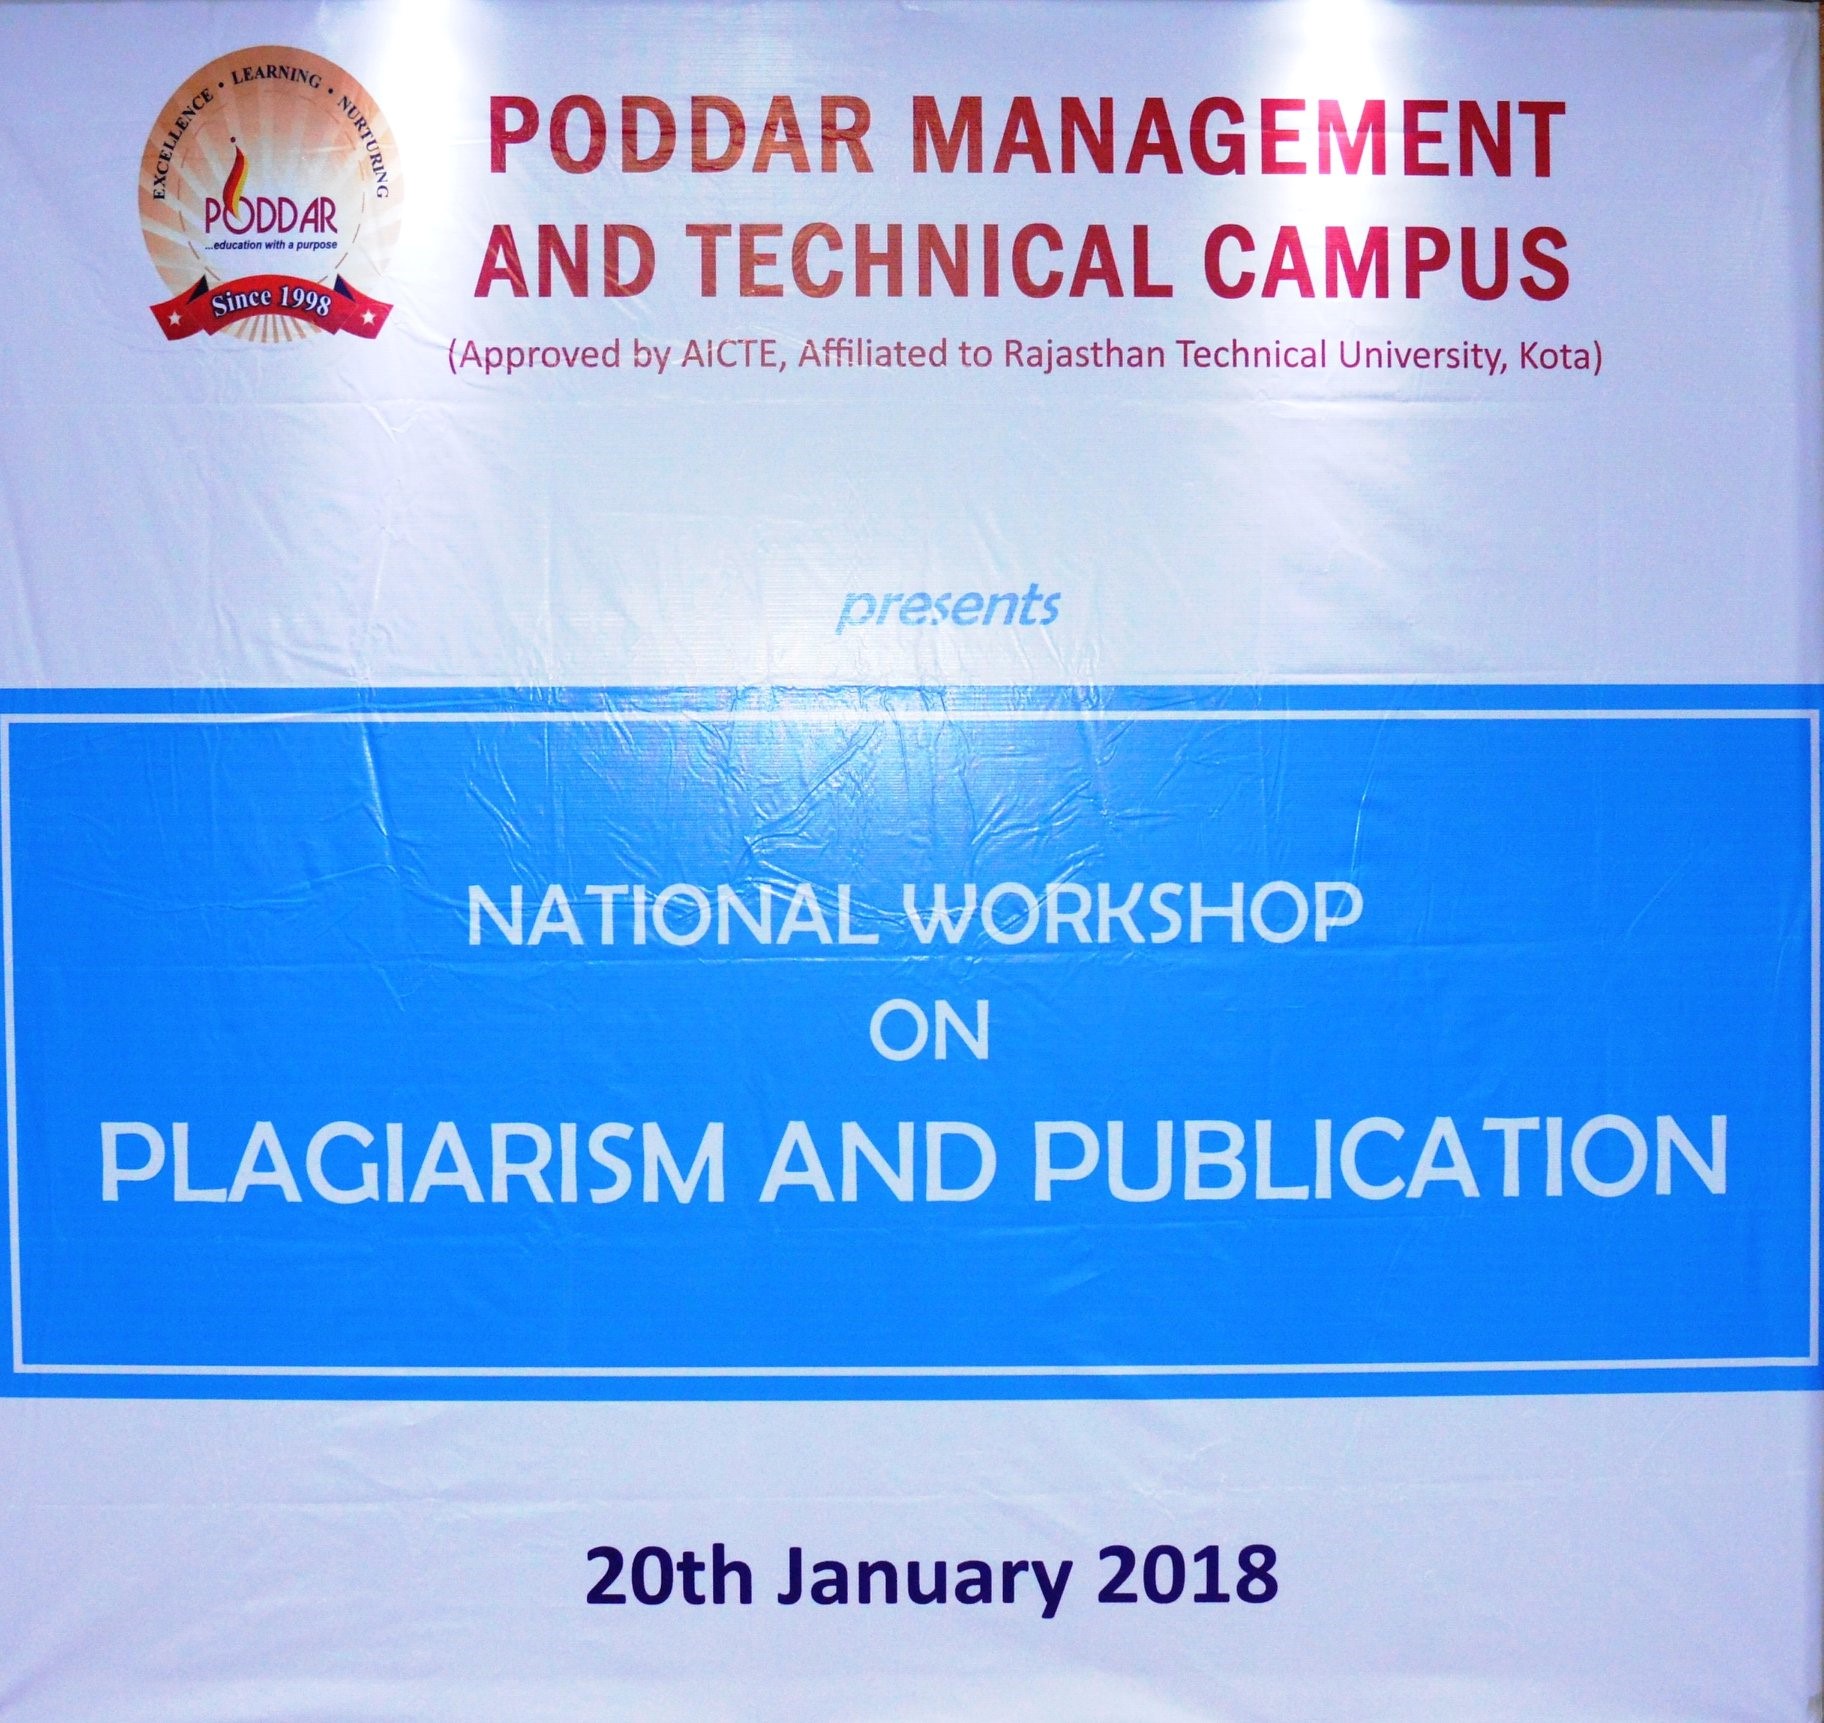 National Workshop on Plagiarism and Publication